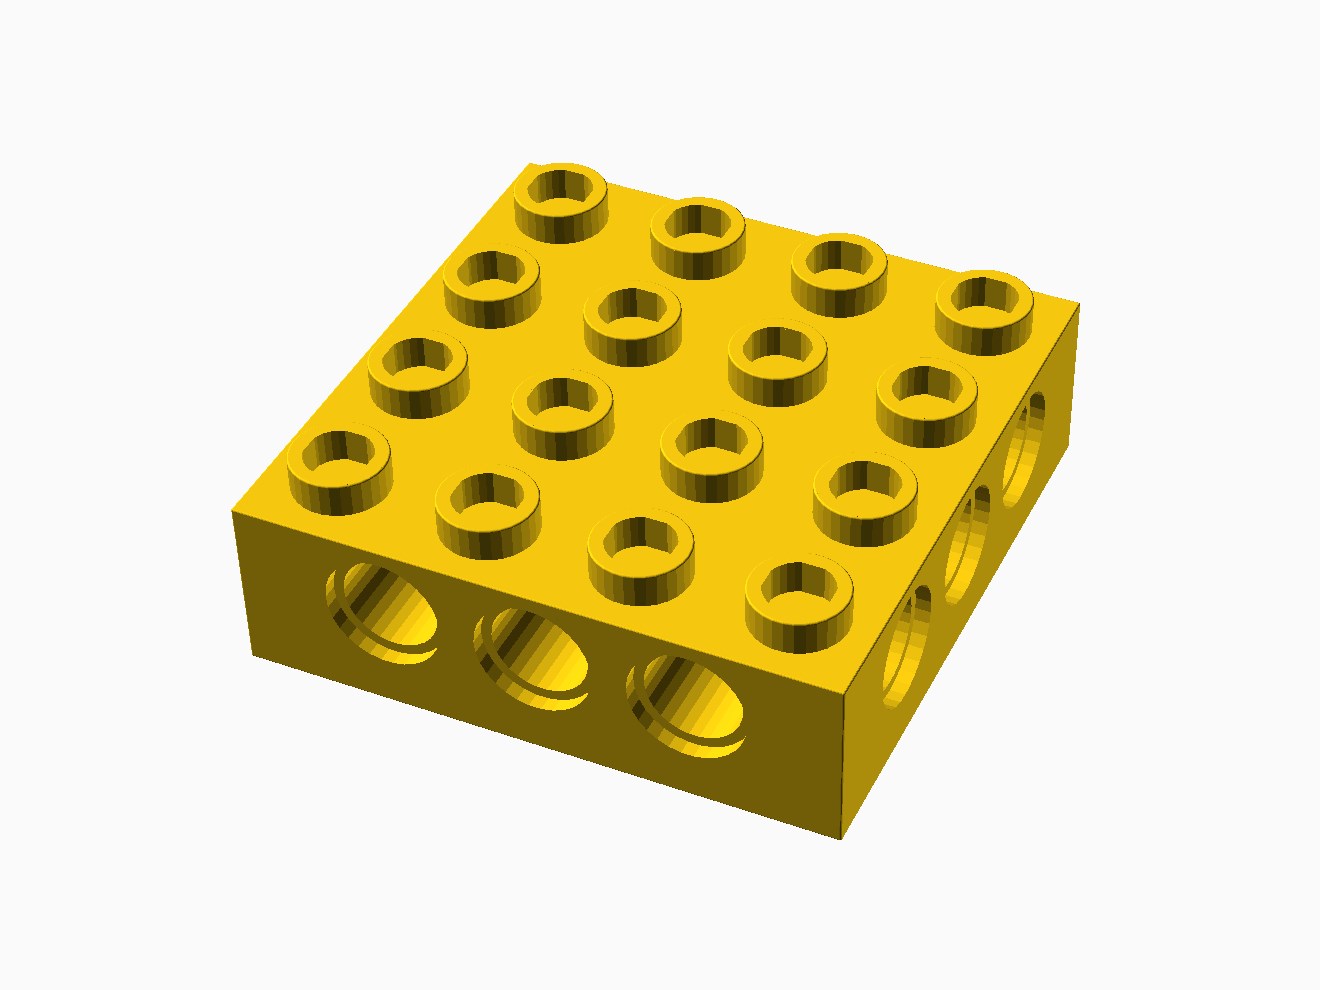 3D printable model of a LEGO Technic 4x4 Brick.